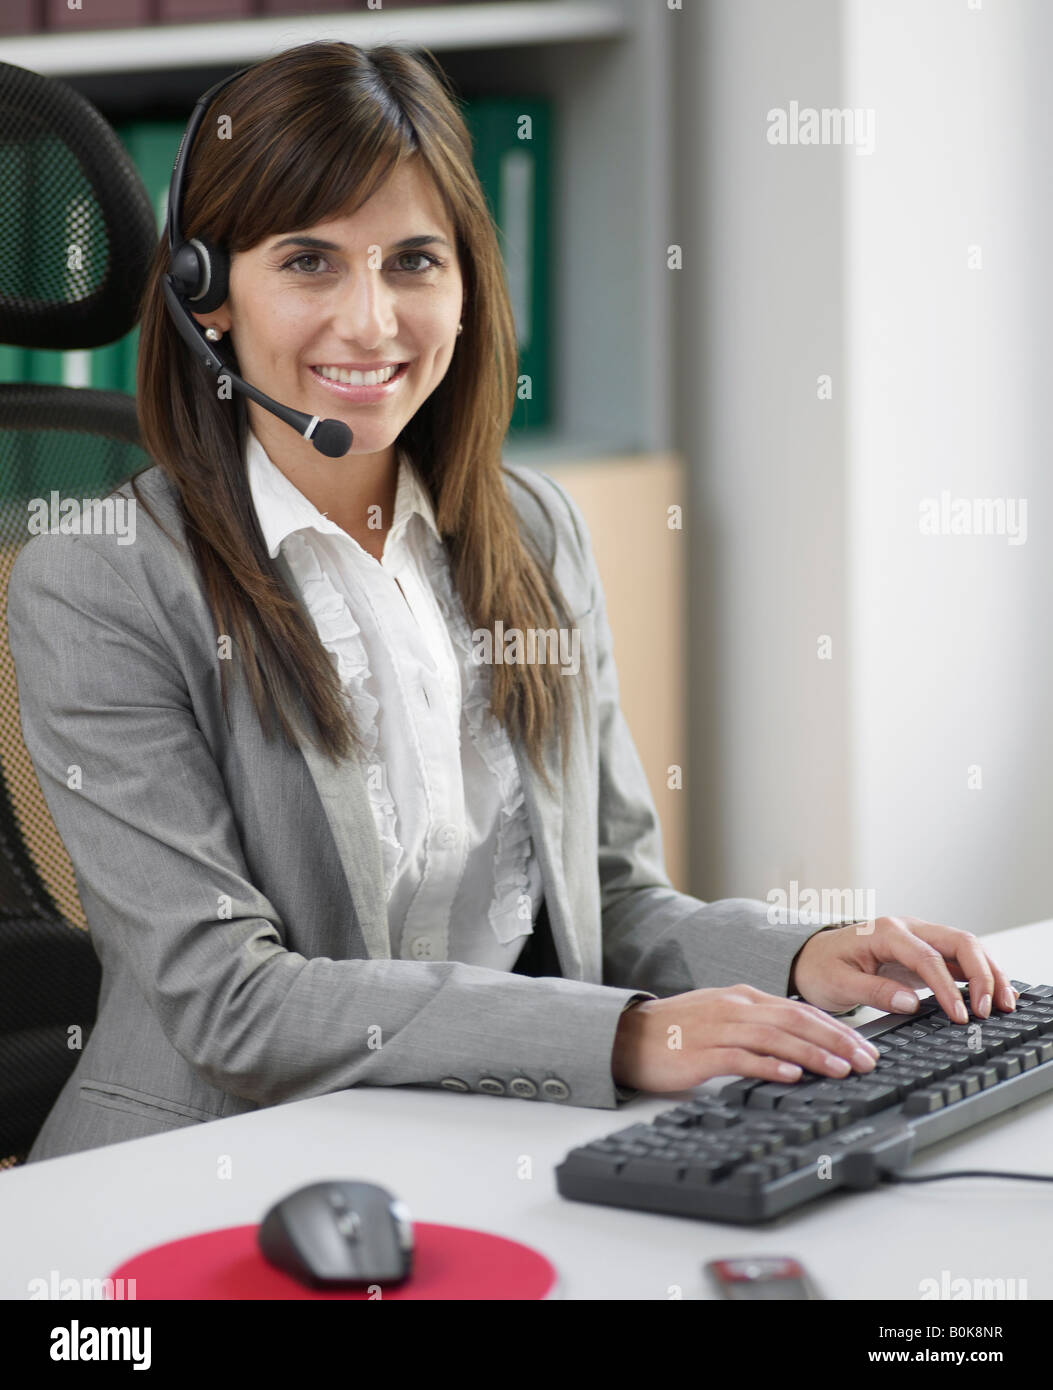 Telephone Operator at Desk Stock Photo